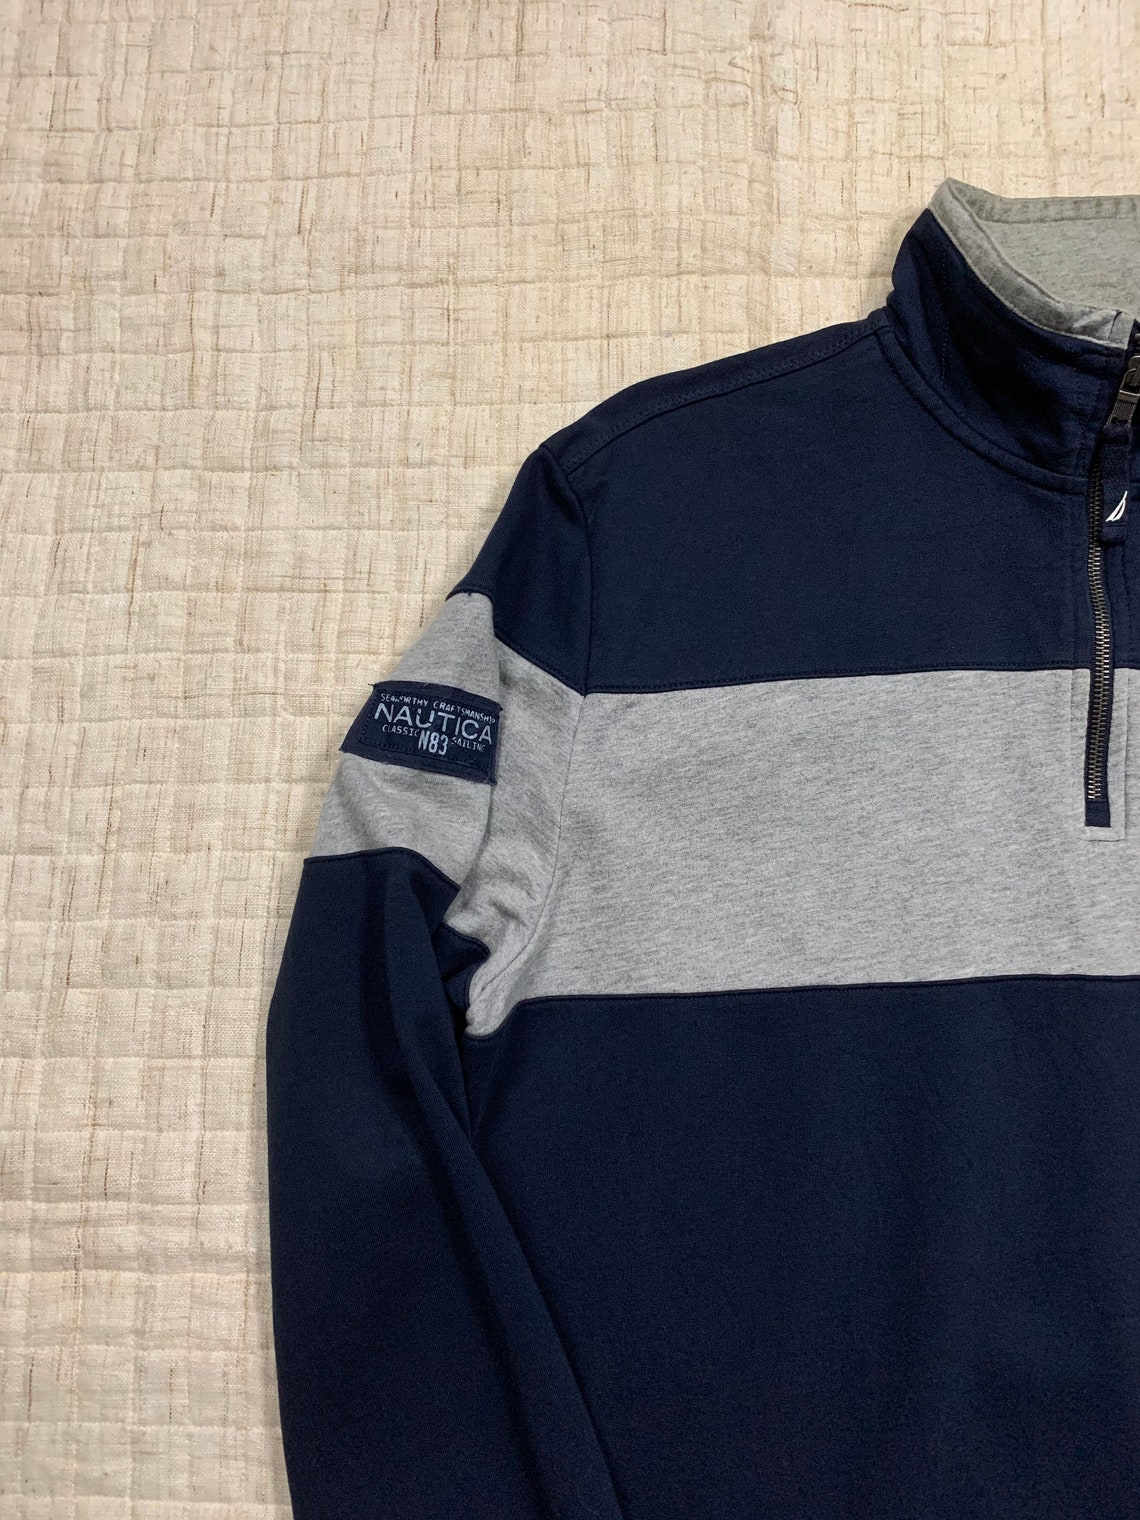 Nautica Brand Half Zip Sweater Large Size - Etsy Denmark